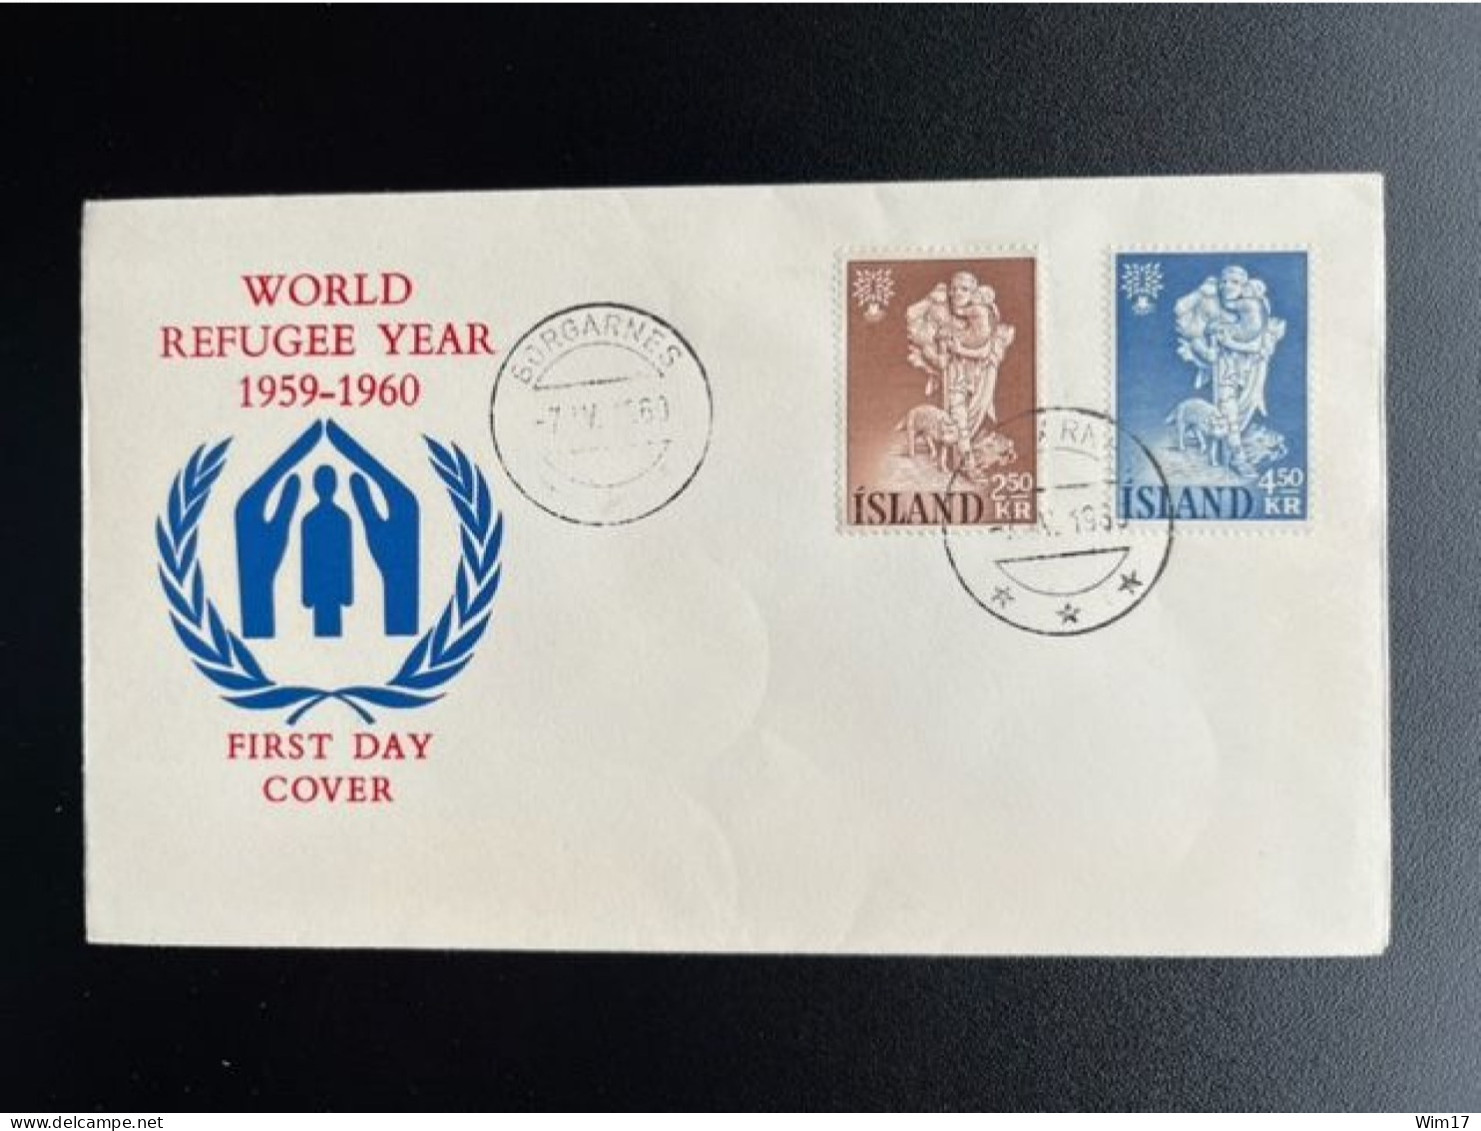 ICELAND ISLAND 1960 FDC WORLD REFUGEE YEAR 07-04-1960 IJSLAND - FDC